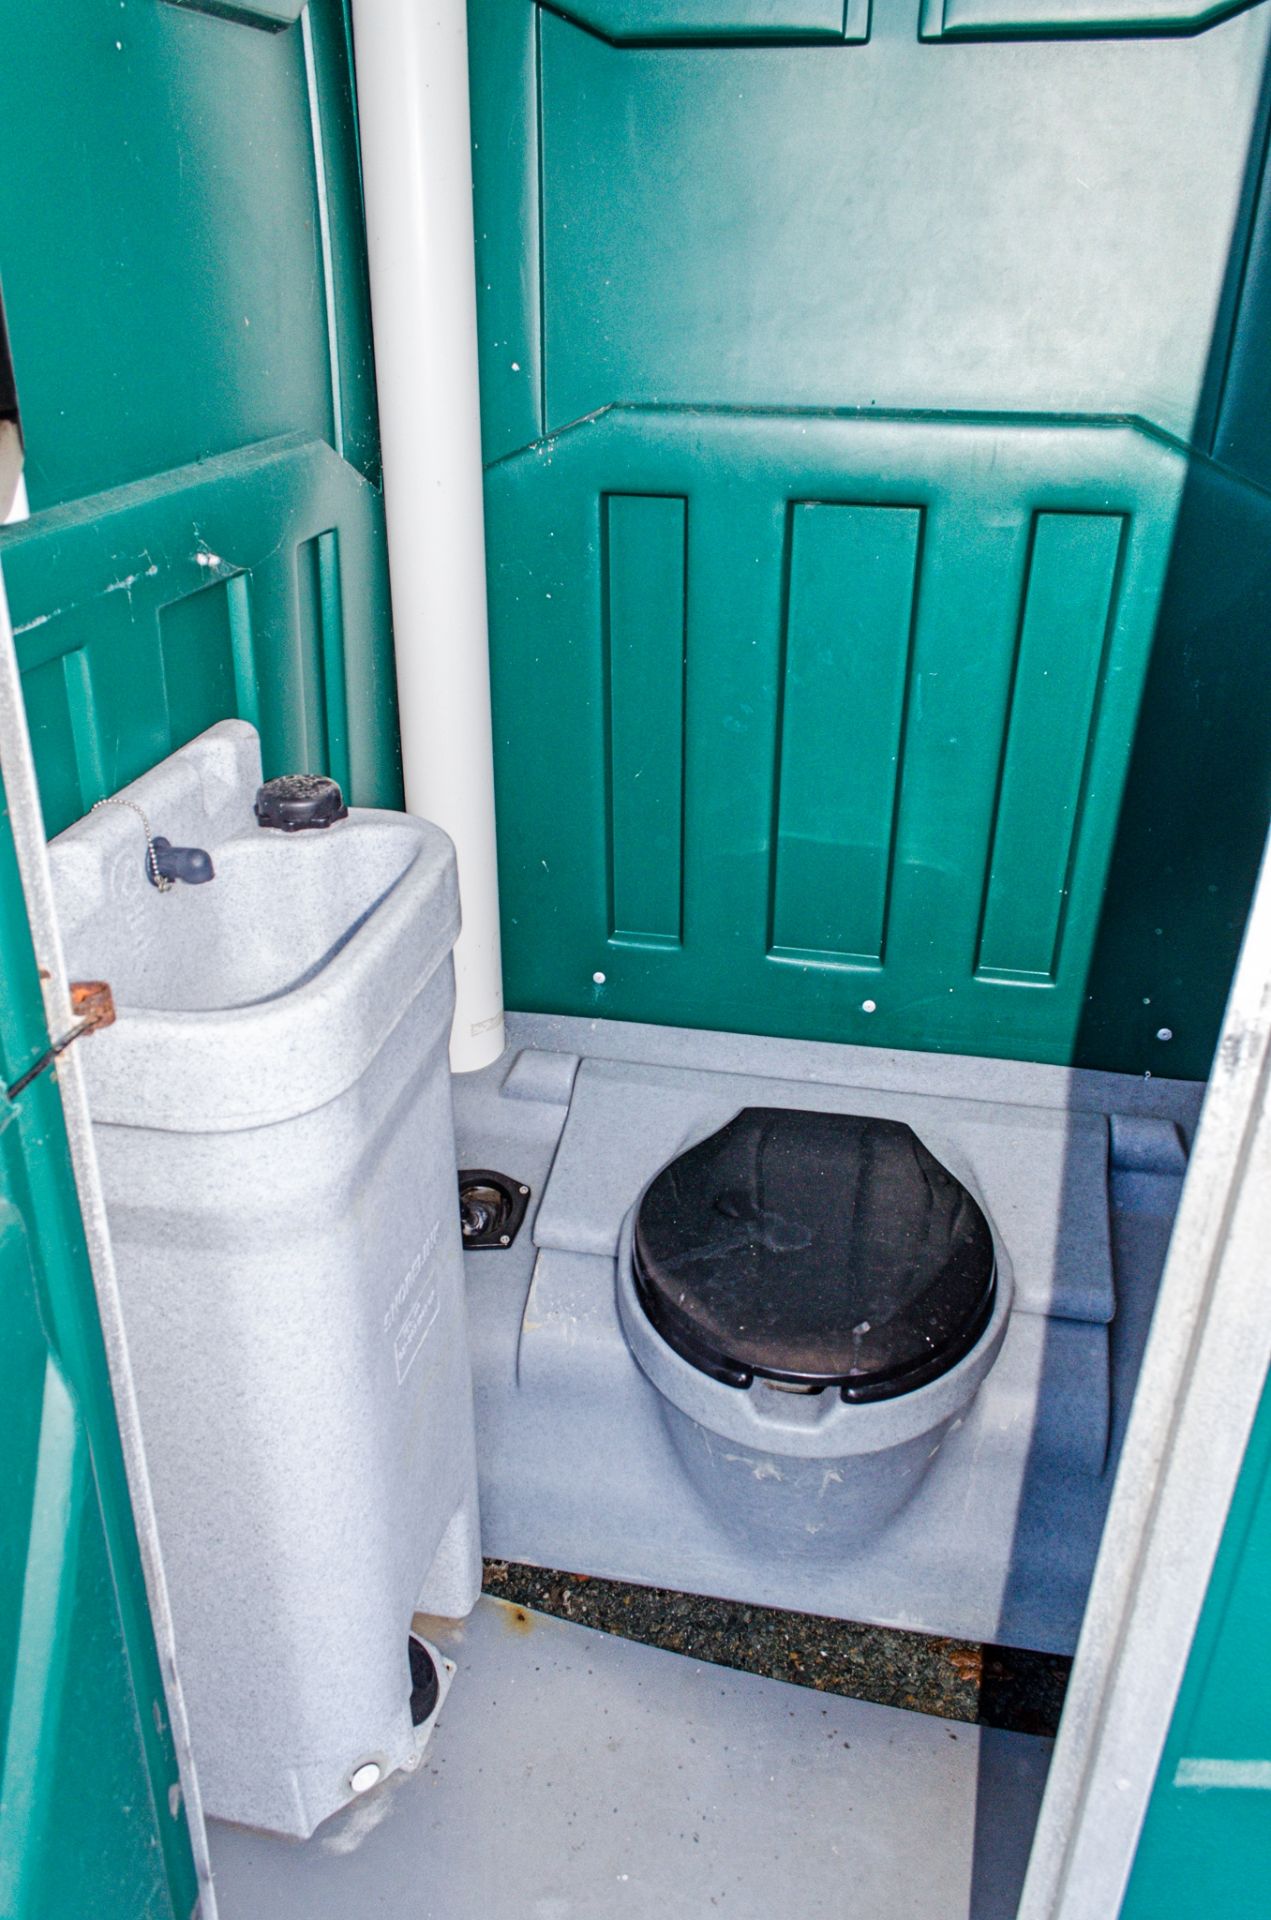 Plastic portable site toilet - Image 2 of 2